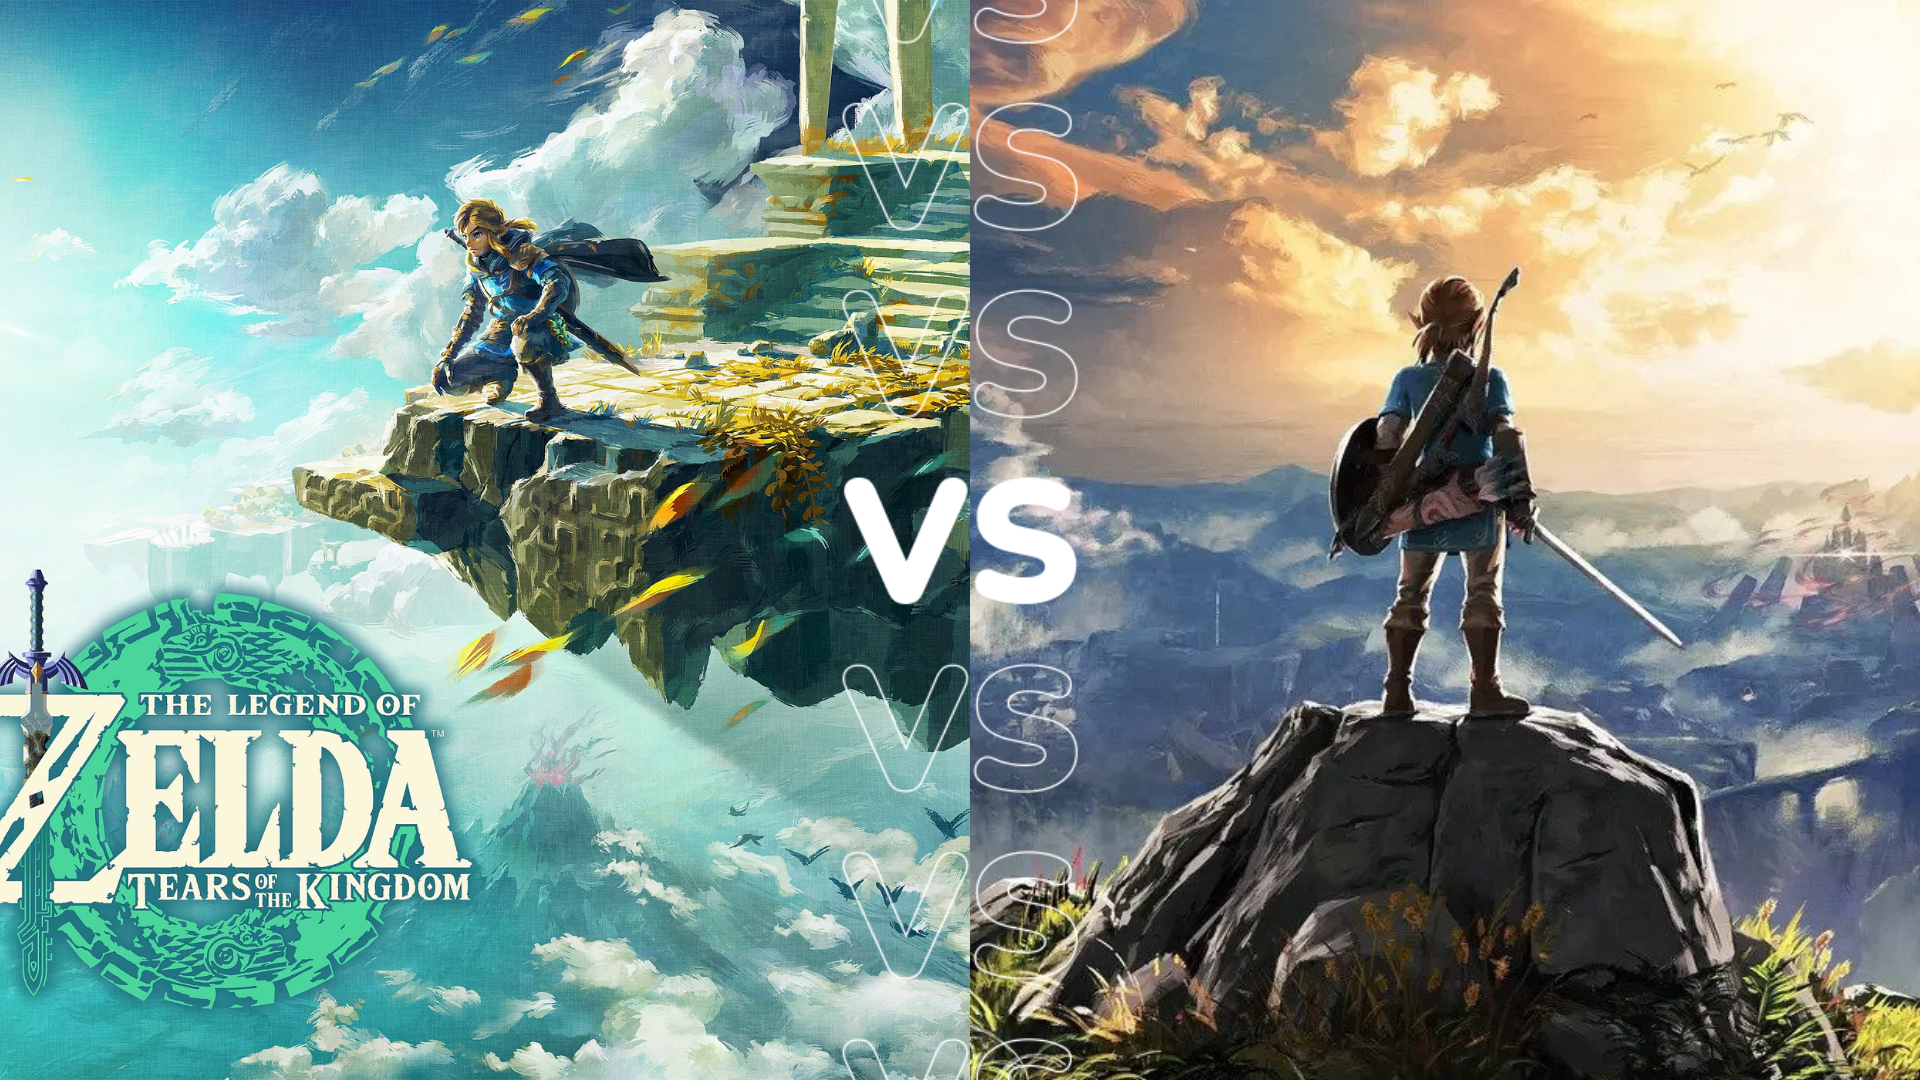 Zelda Tears of the Kingdom vs Breath of the Wild